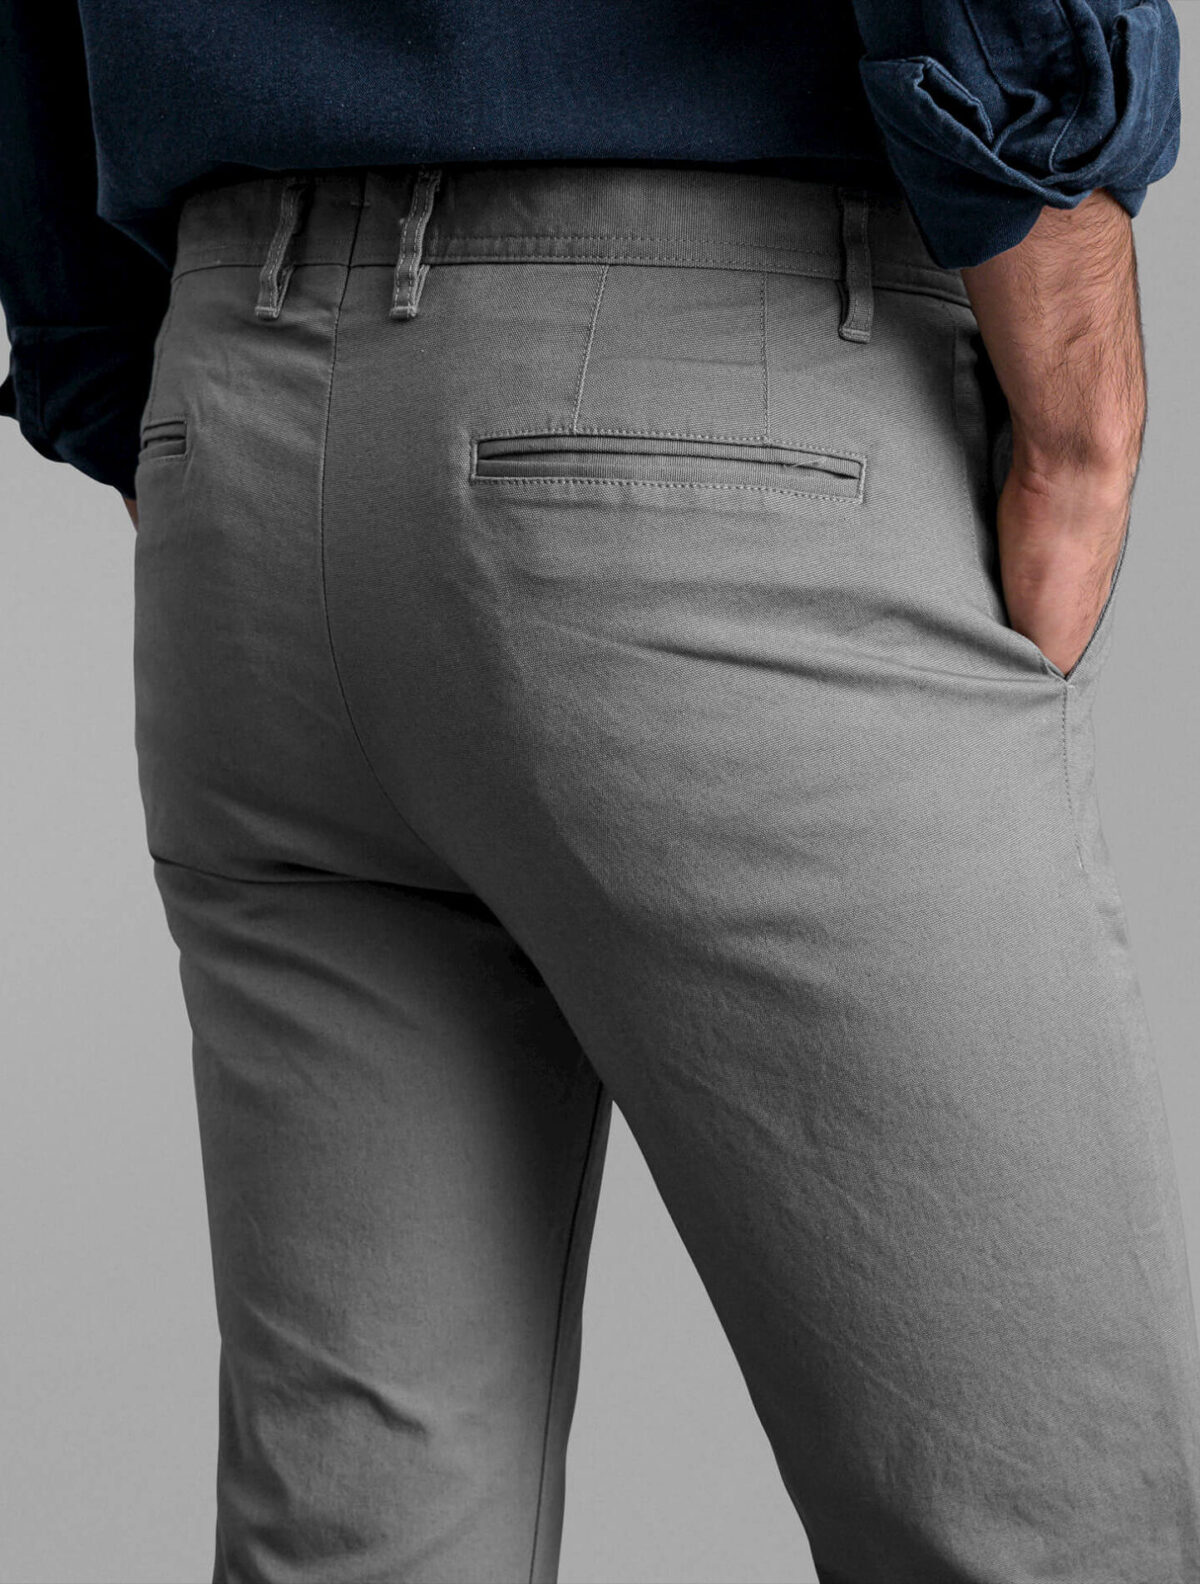 Sondrio - Gray - Stretch - Brushed Twill Trouser